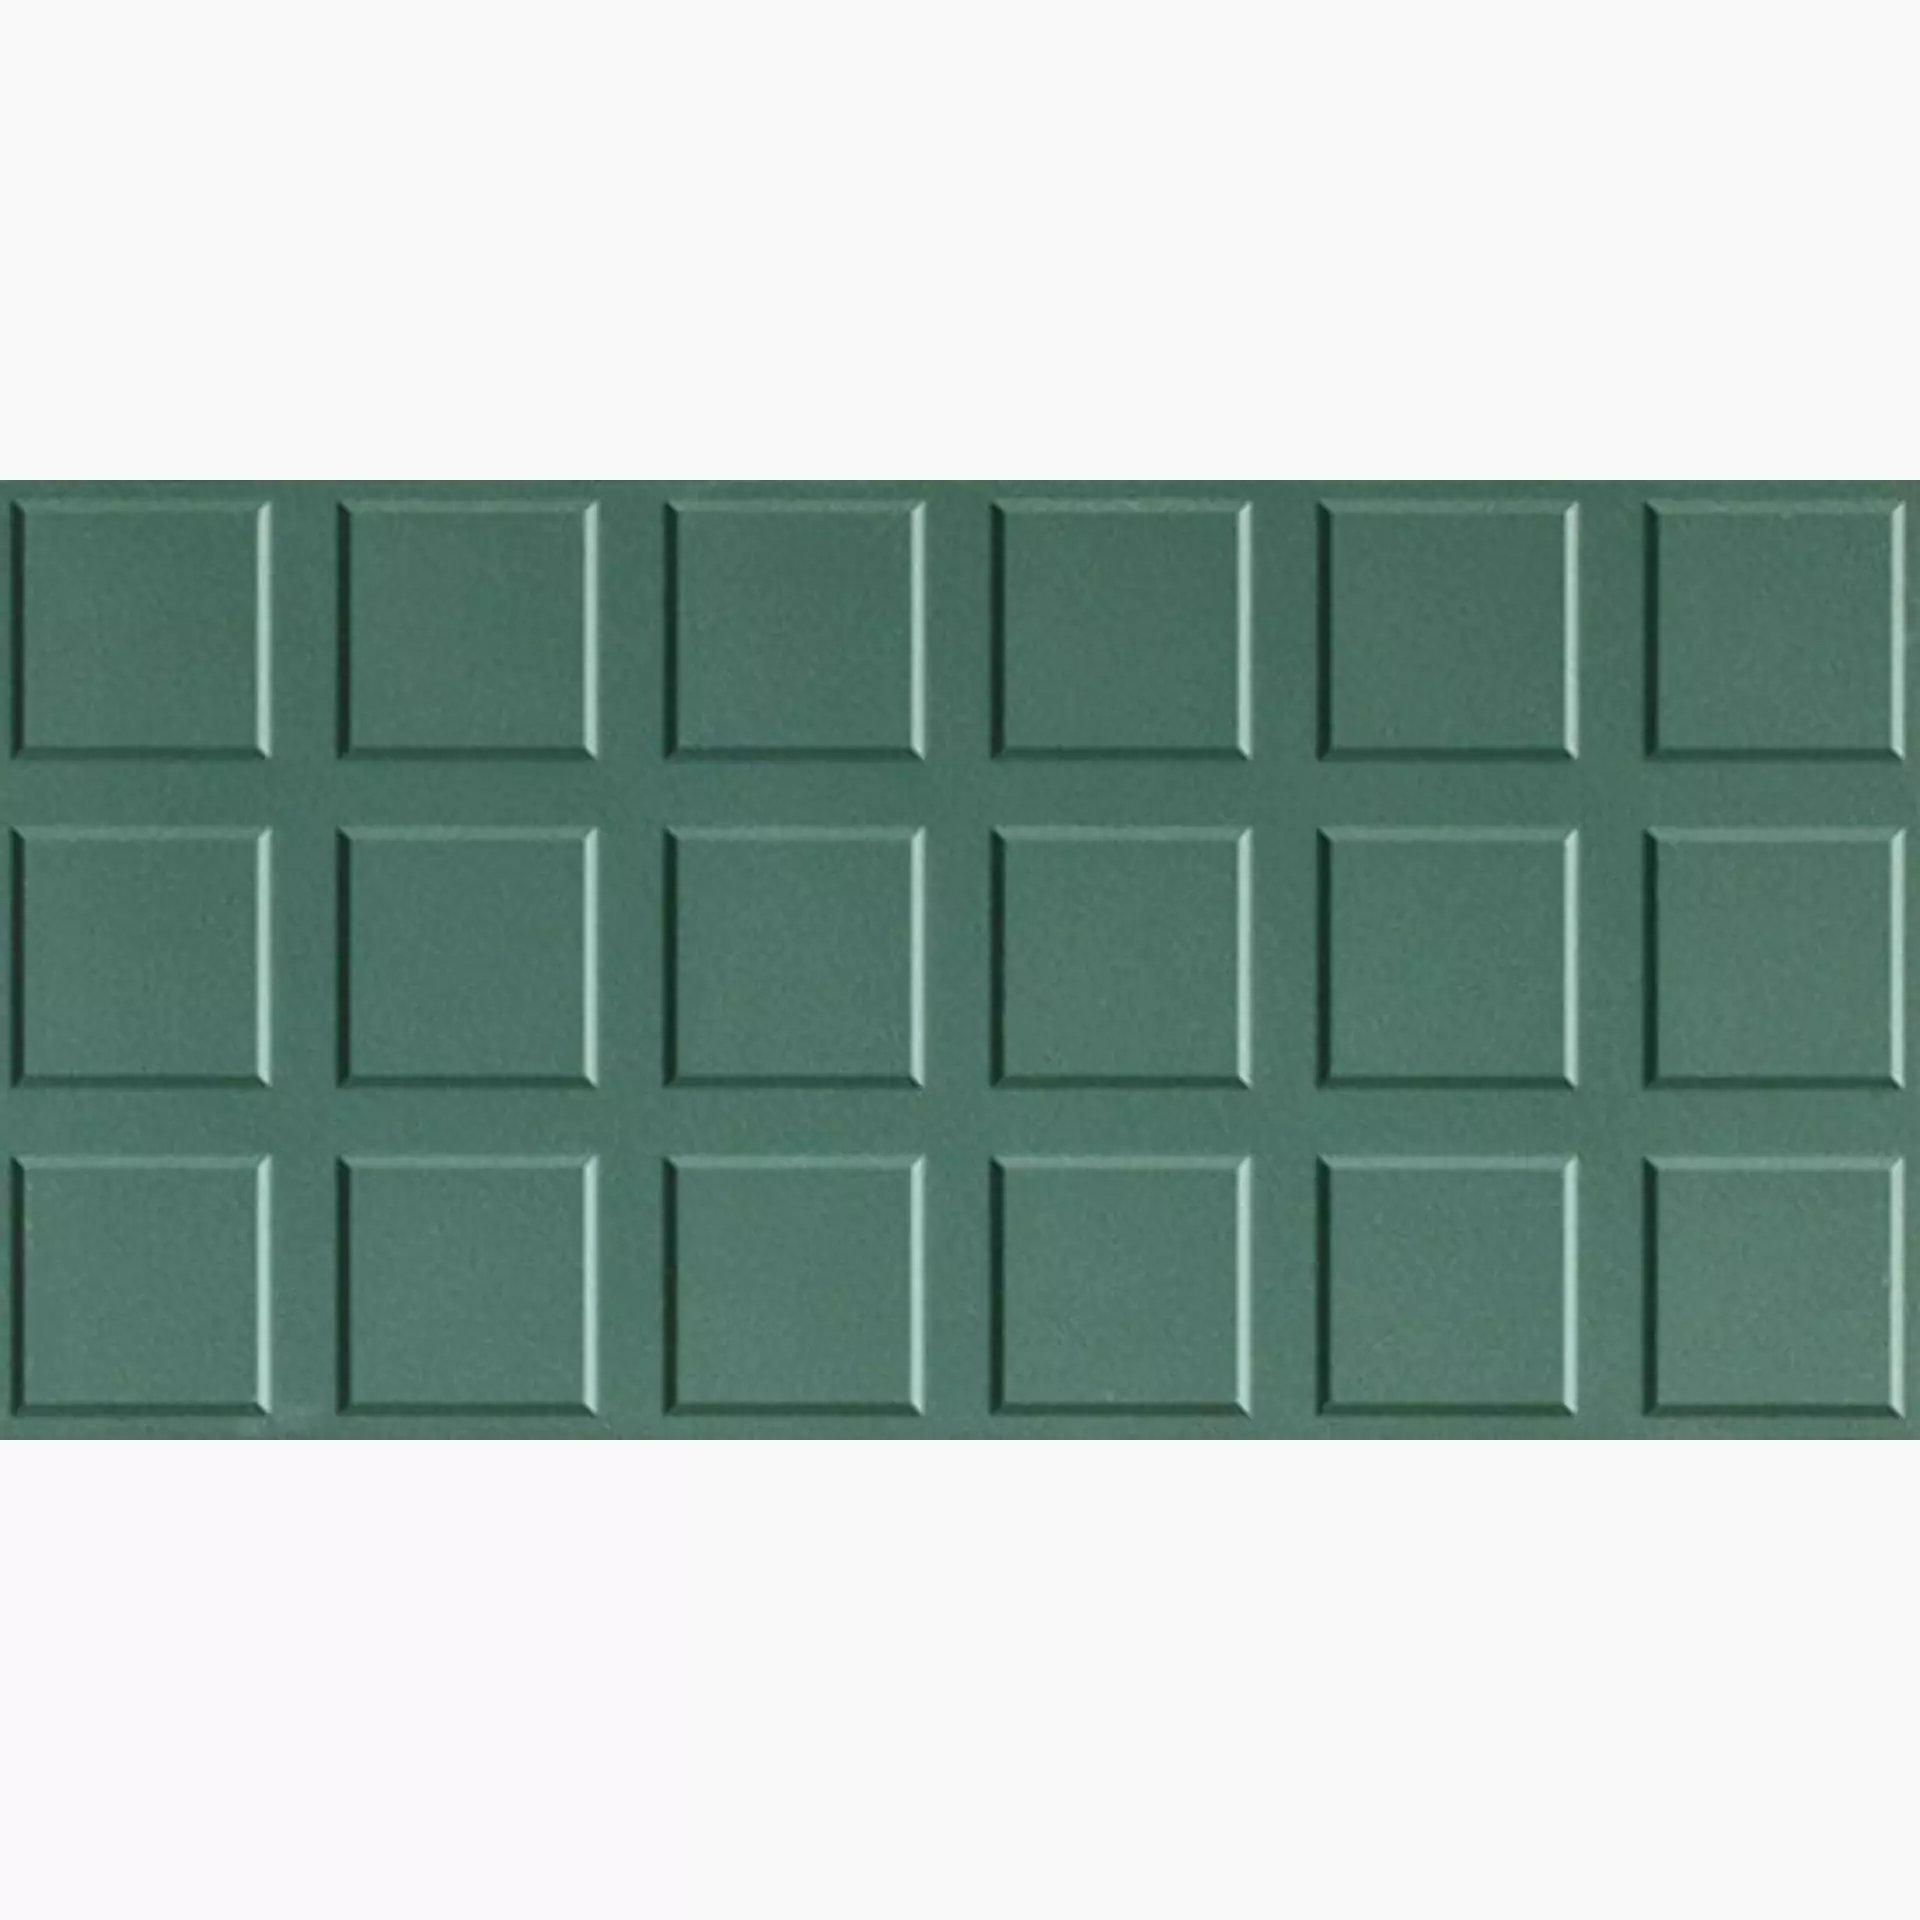 Fioranese Fio Block Eden Green Naturale 0BK368R 30,2x60,4cm rectified 10mm